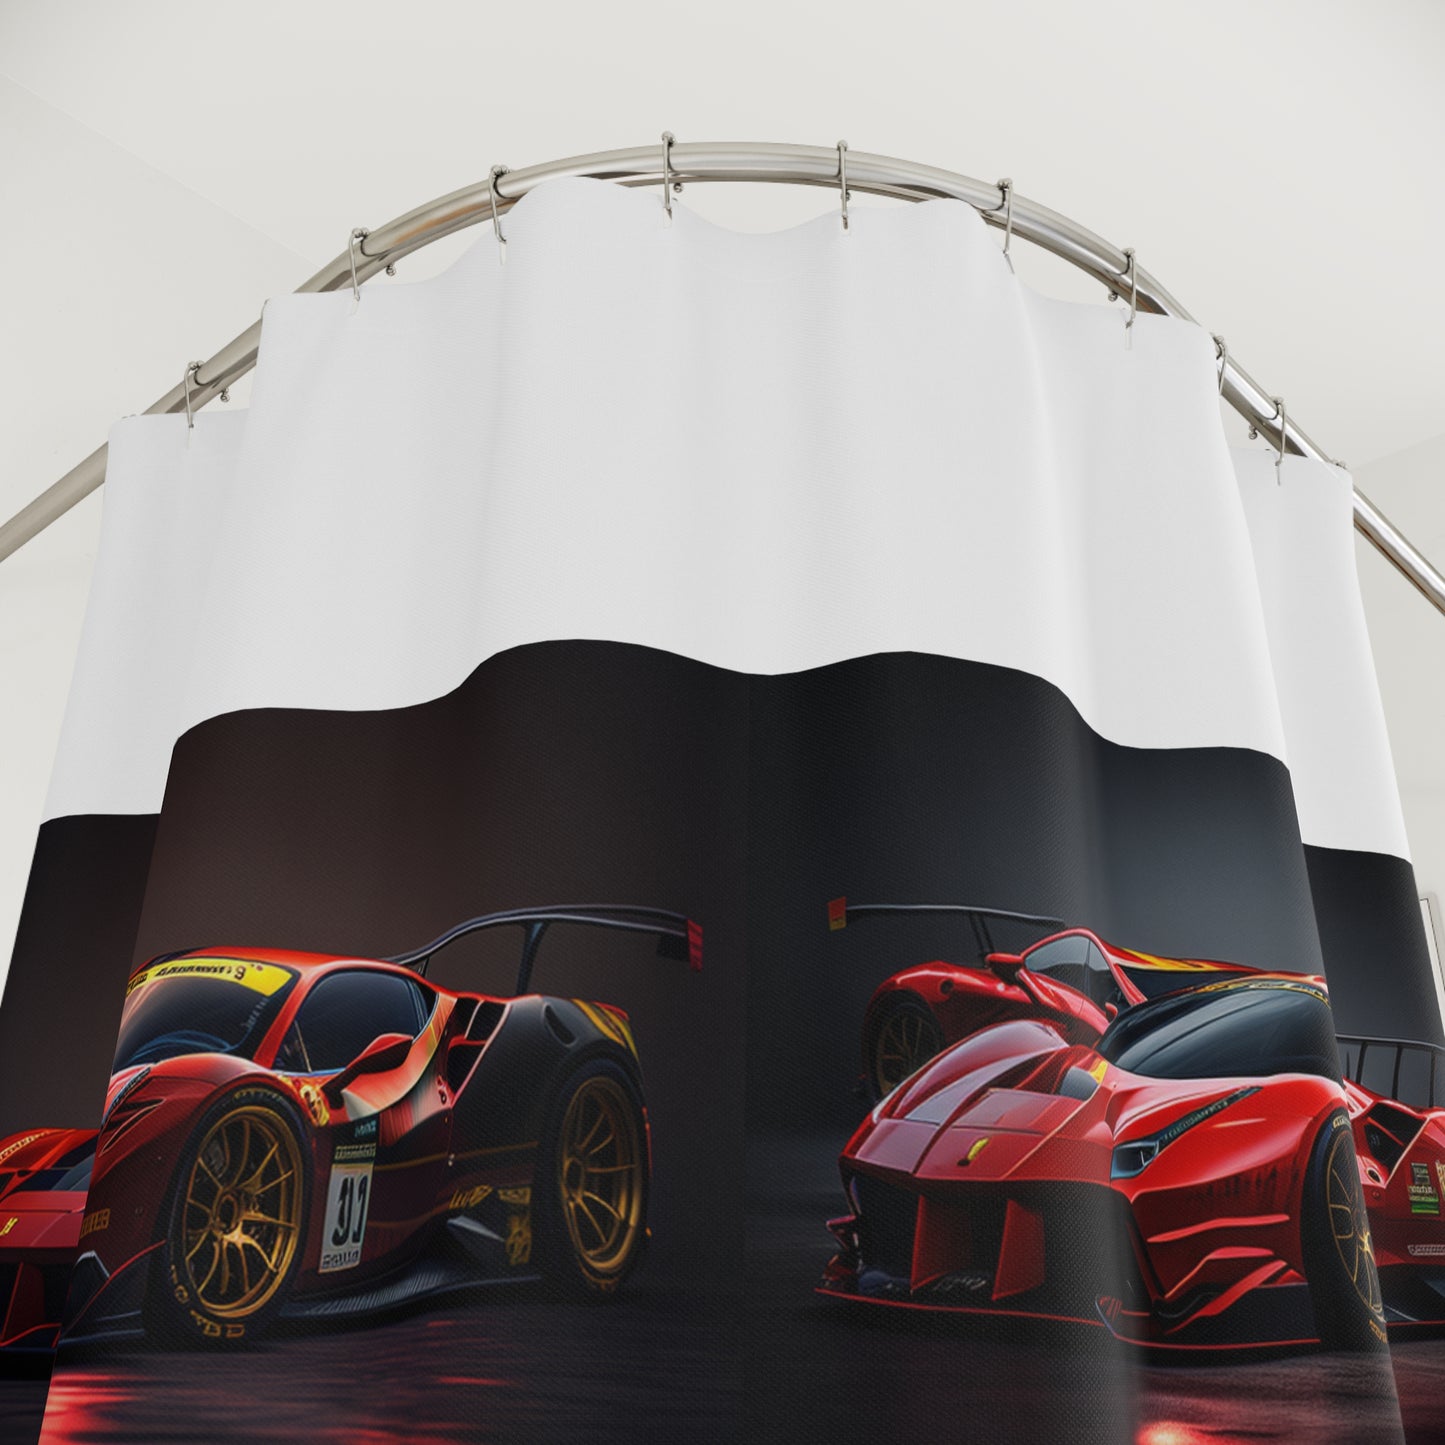 Polyester Shower Curtain Ferrari Red 5